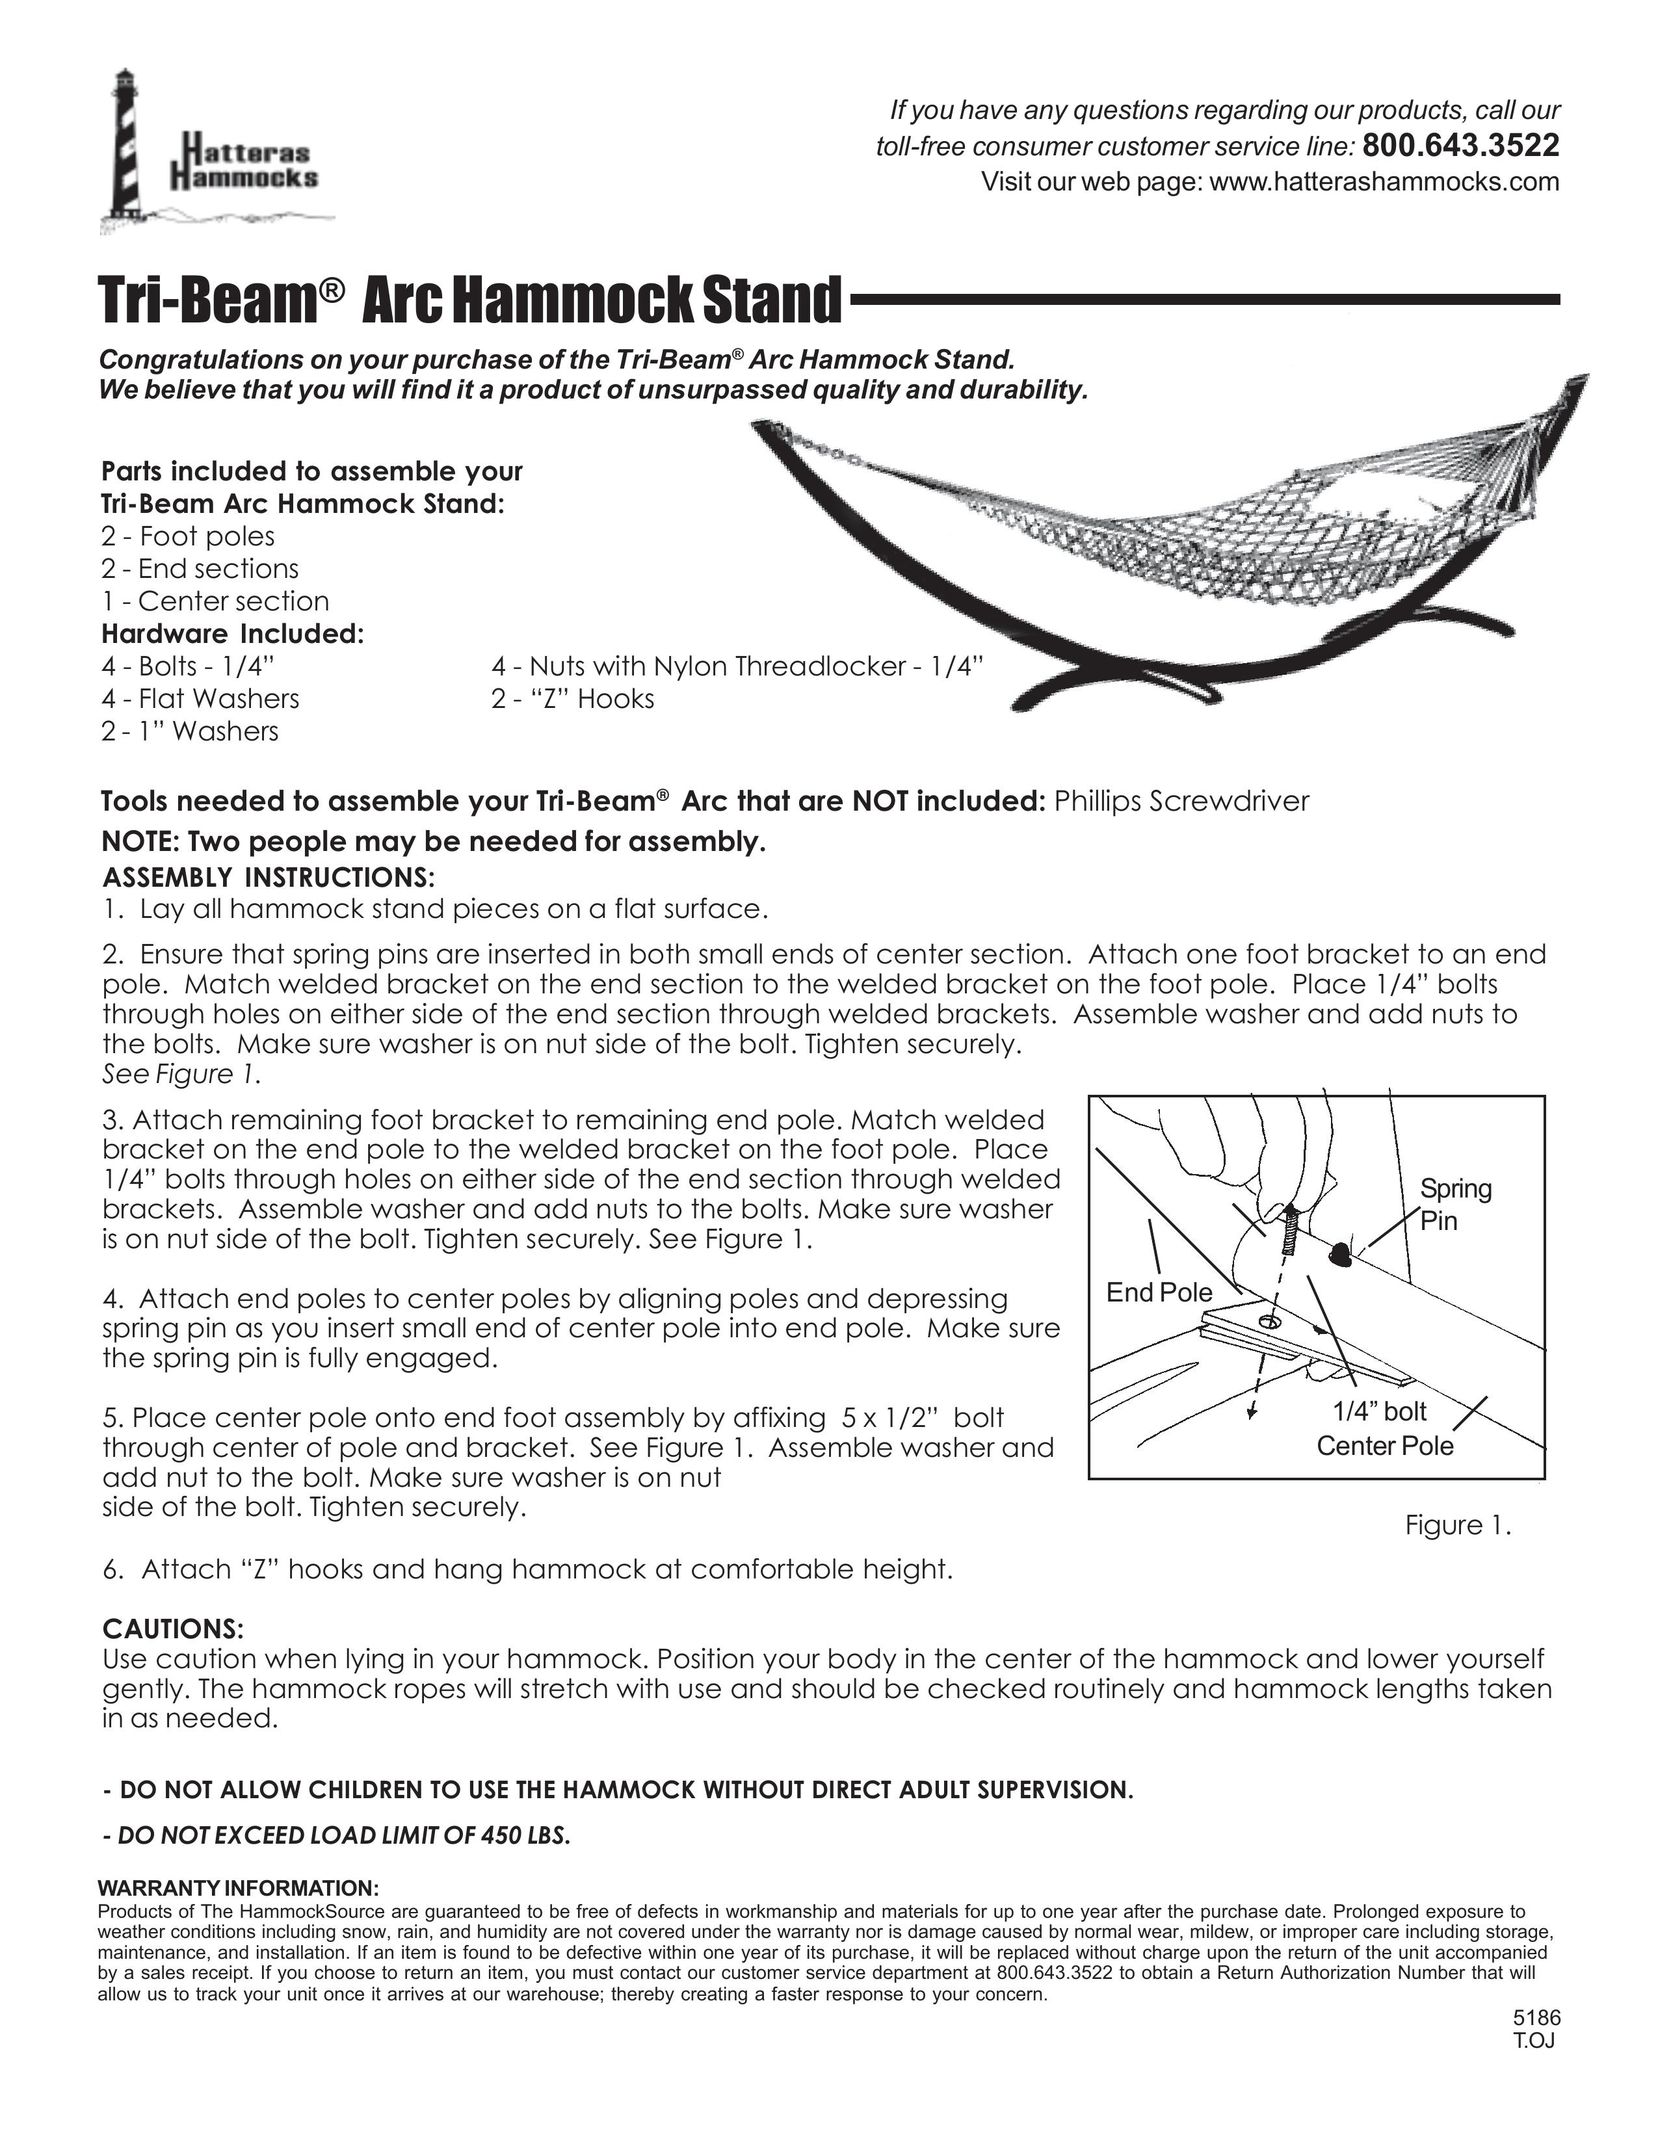 Hatteras Hammocks Tri-Beam Indoor Furnishings User Manual